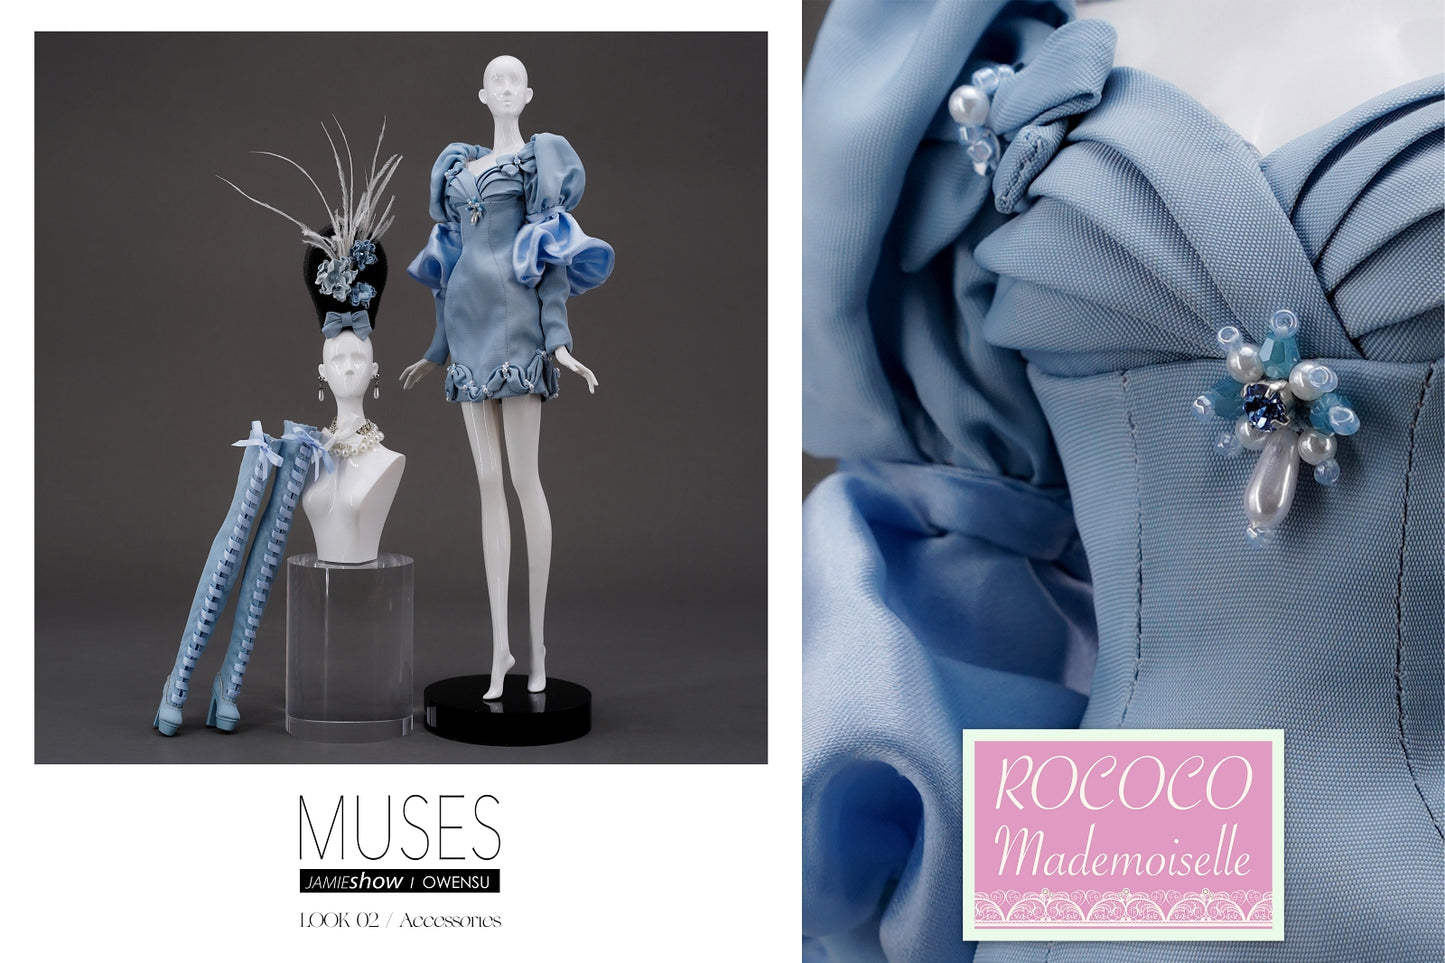 JAMIEshow Muses Rococo Mademoiselle Fashion #2